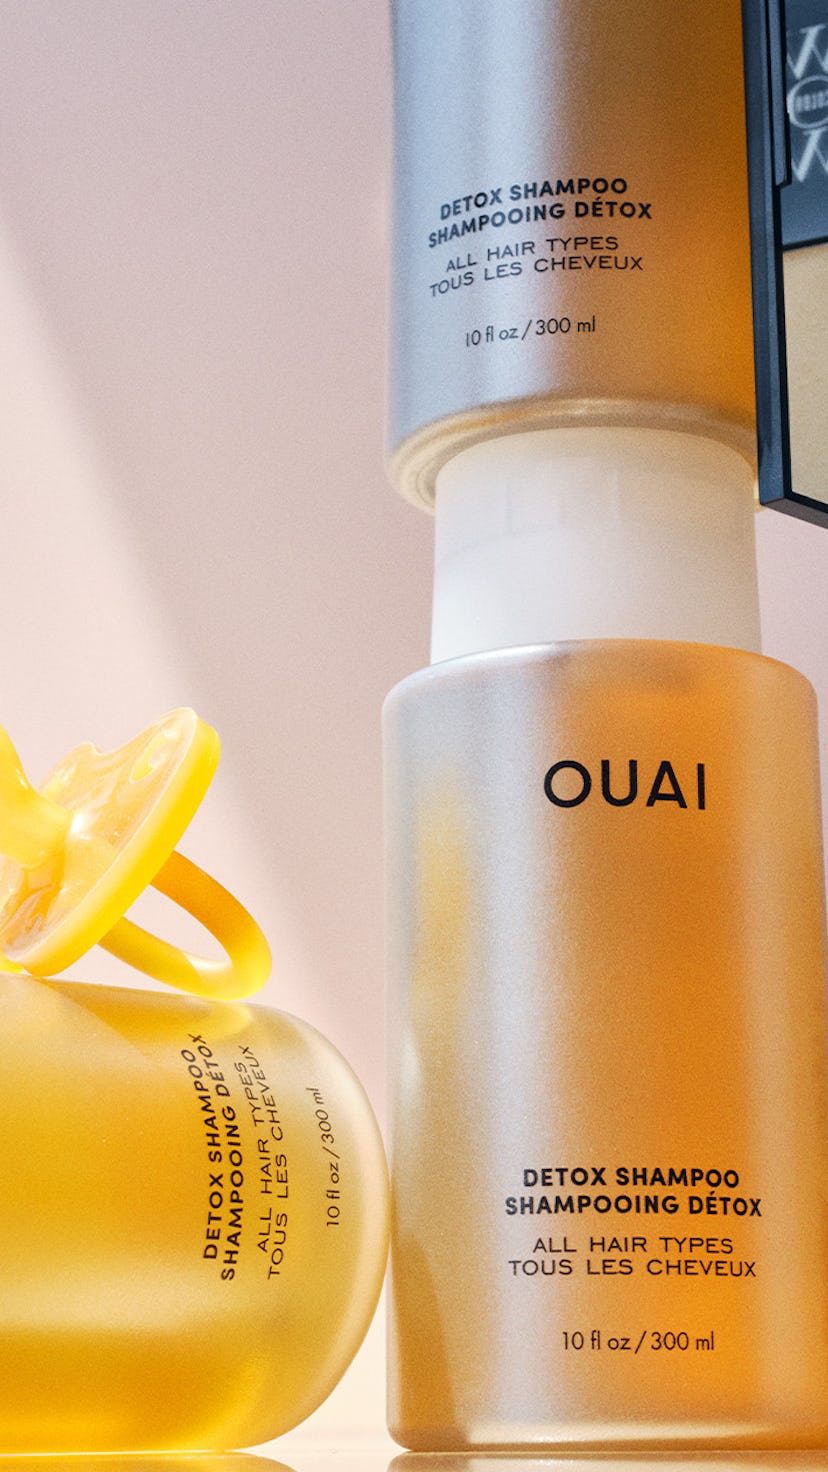 Two bottles of Ouai detox shampoo for pregnant women.